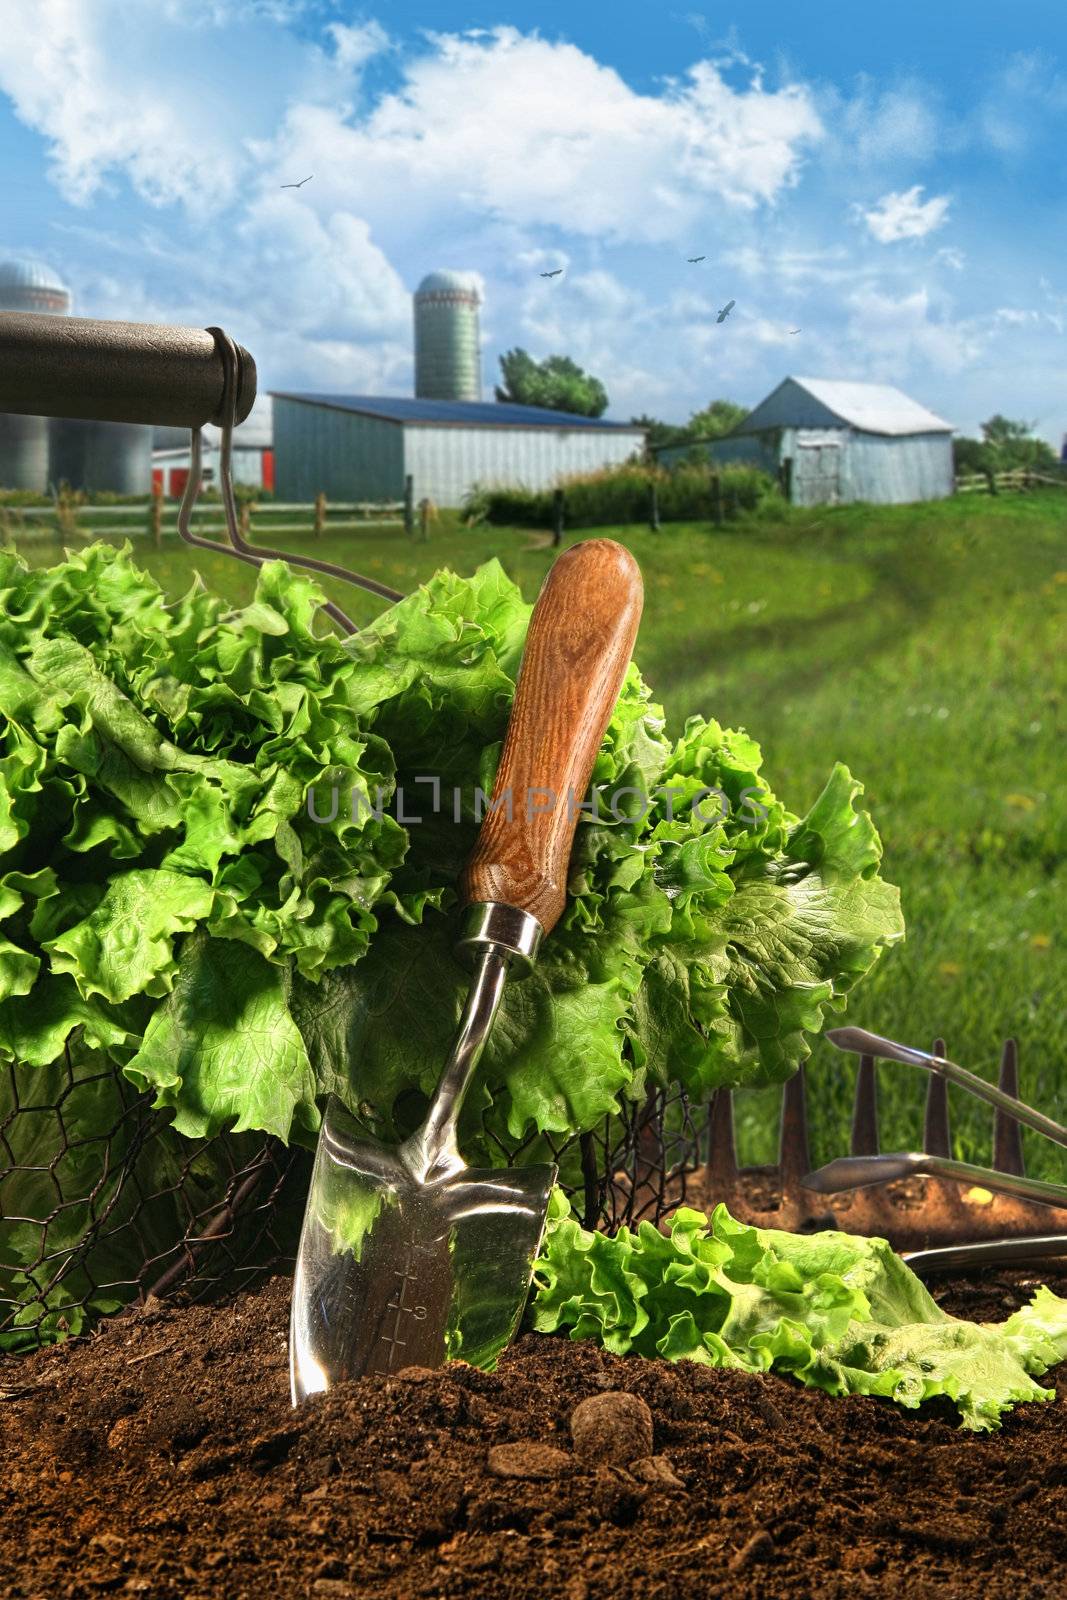 Basket of lettuce in garden against a farm scene